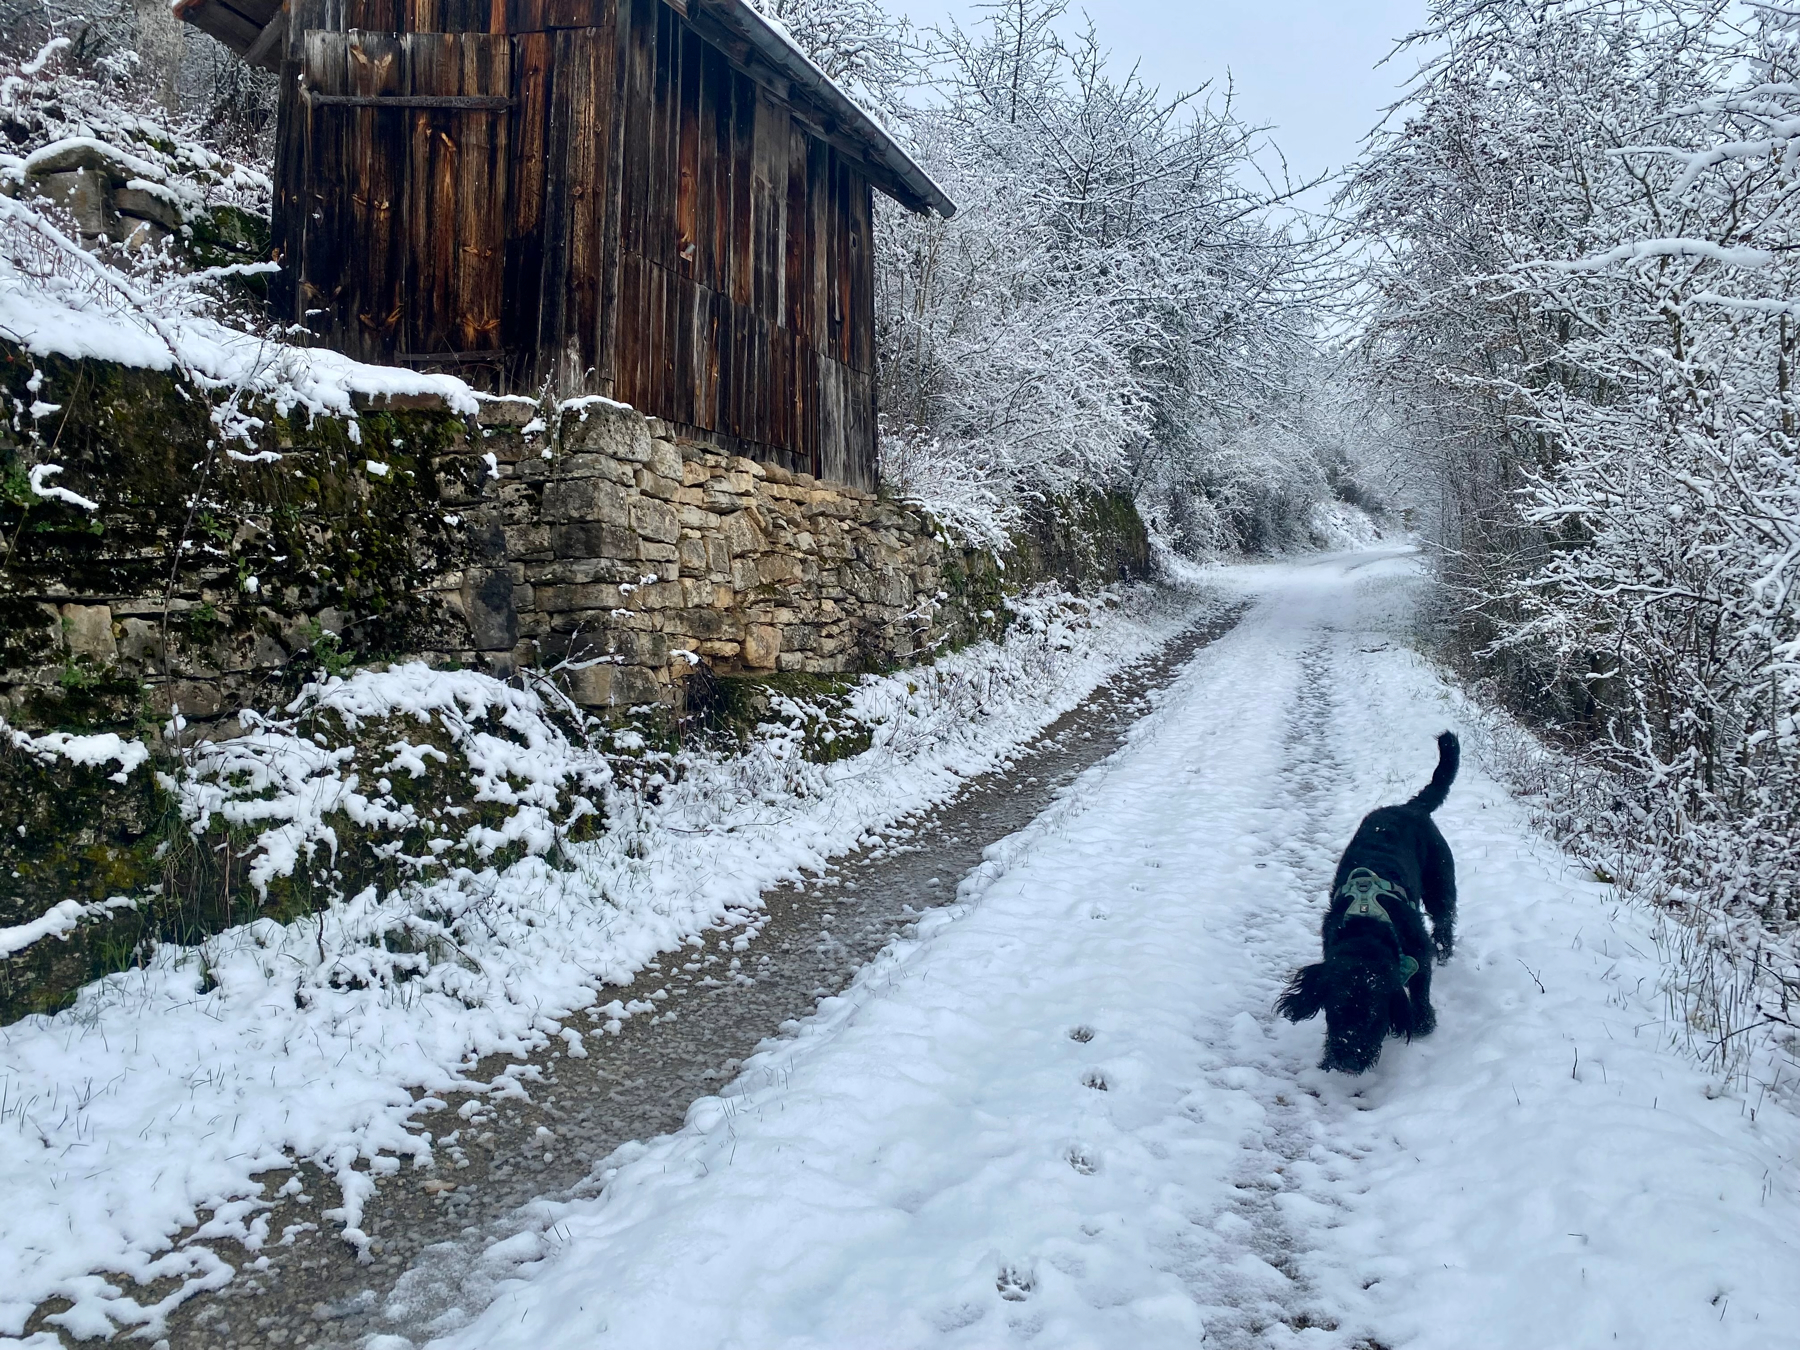 beautiful snowy scenery with a happy black dog